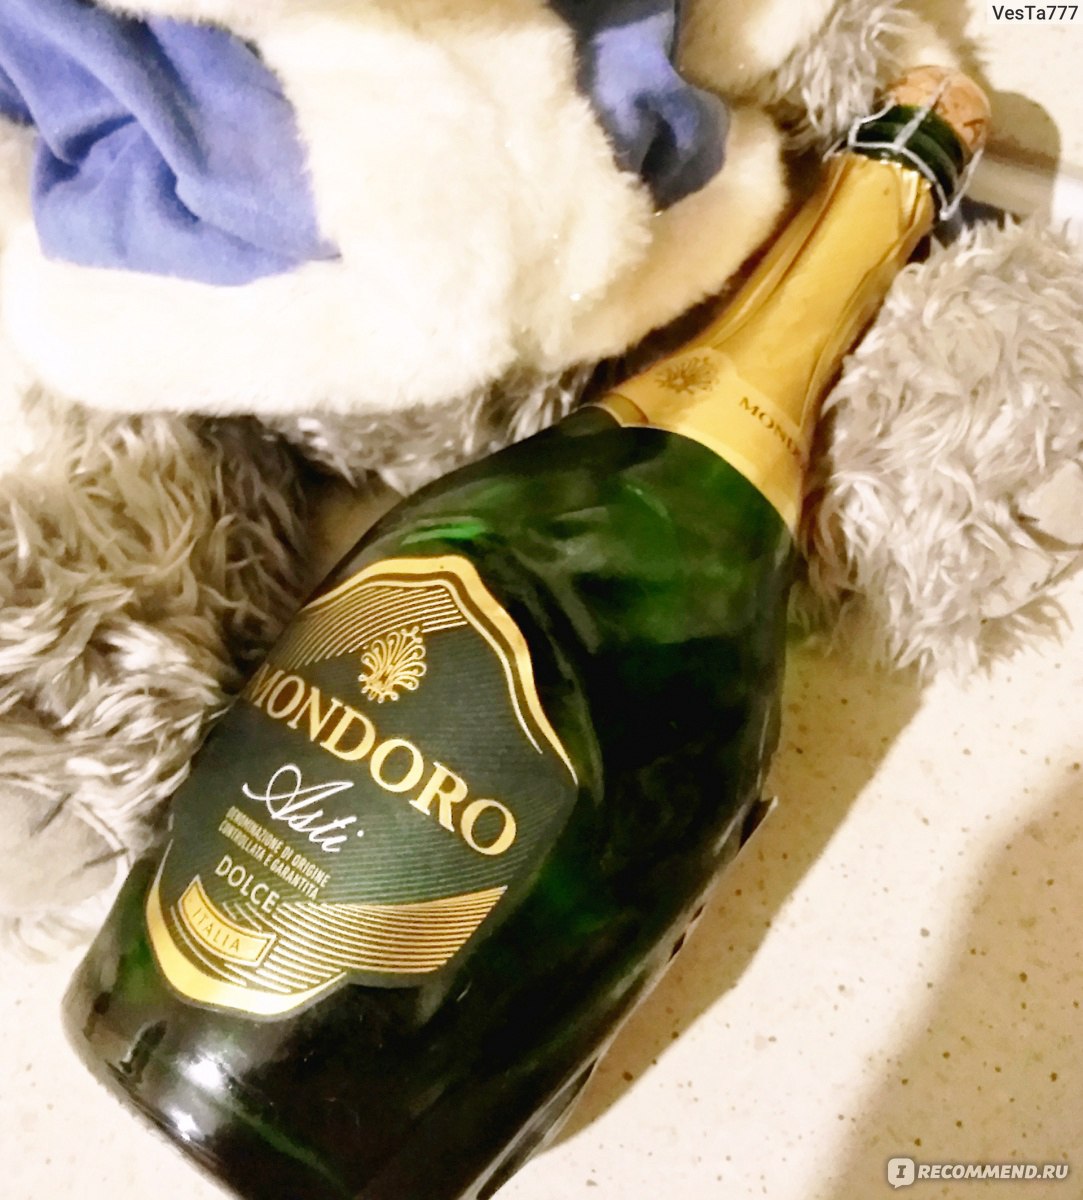 Бутылка шампанского мондоро. Вино Мондоро Асти. Mondoro 2000. Шампанское Мондоро Асти 2000 год. Игристое вино Asti "Mondoro".